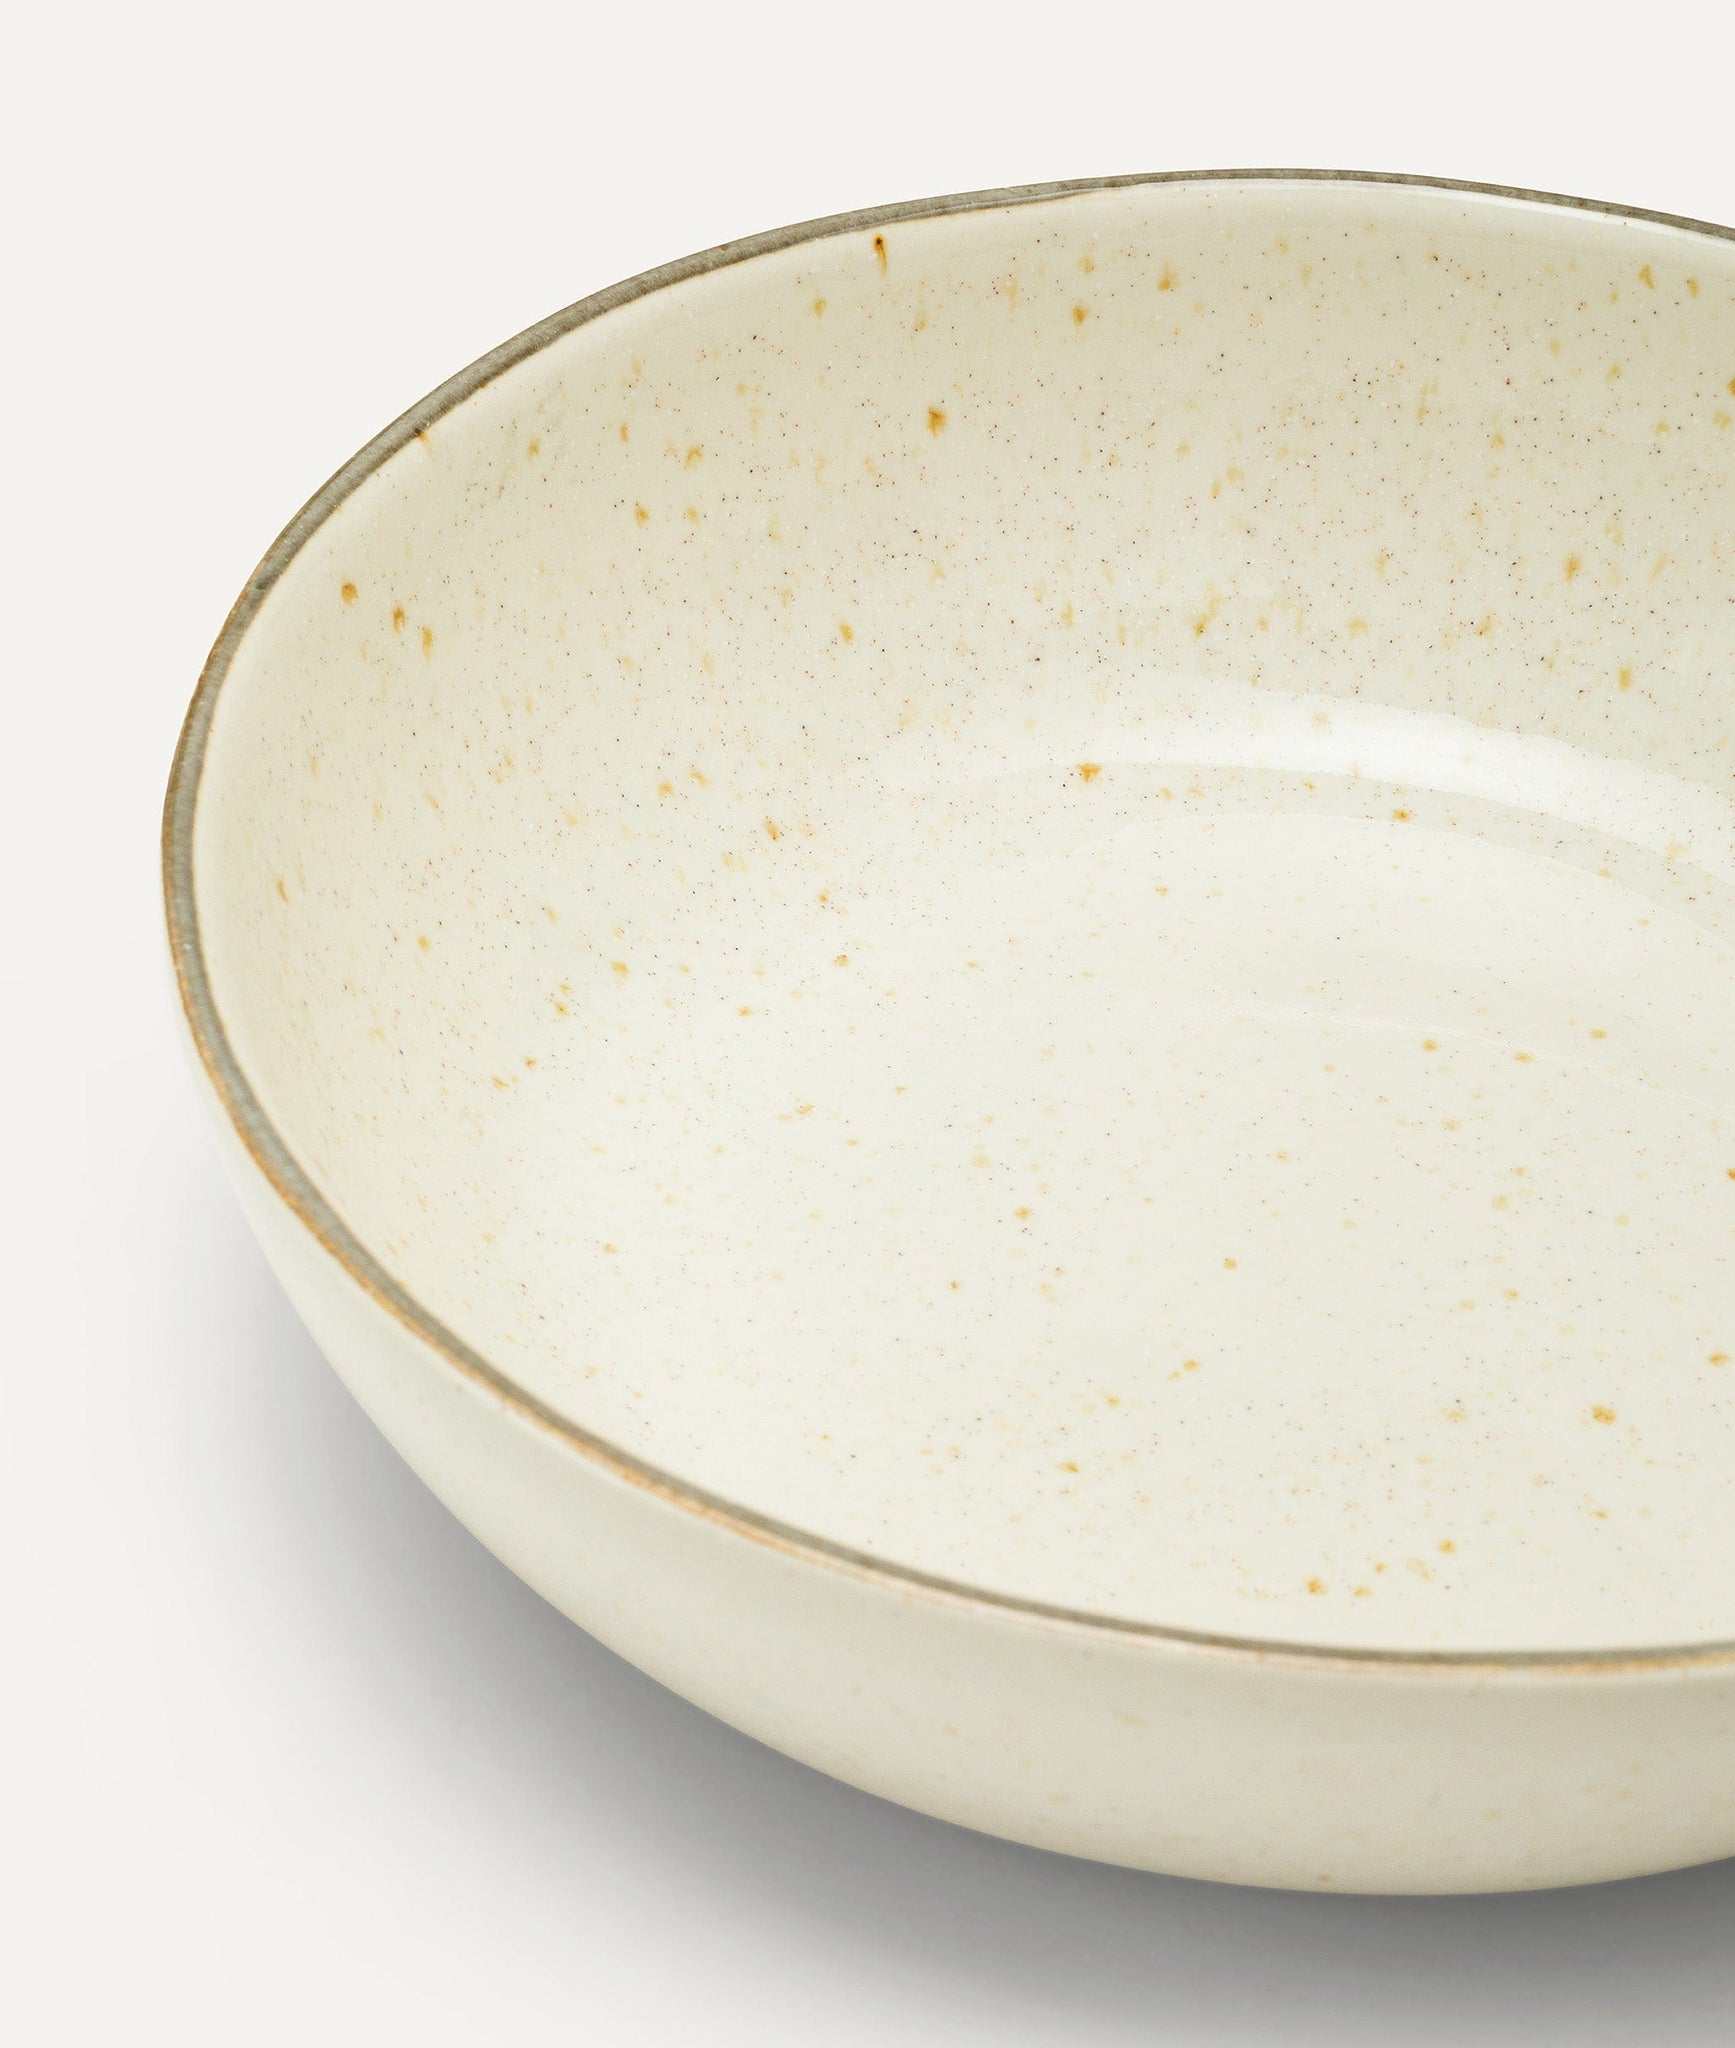 Low Bowl in Ceramic